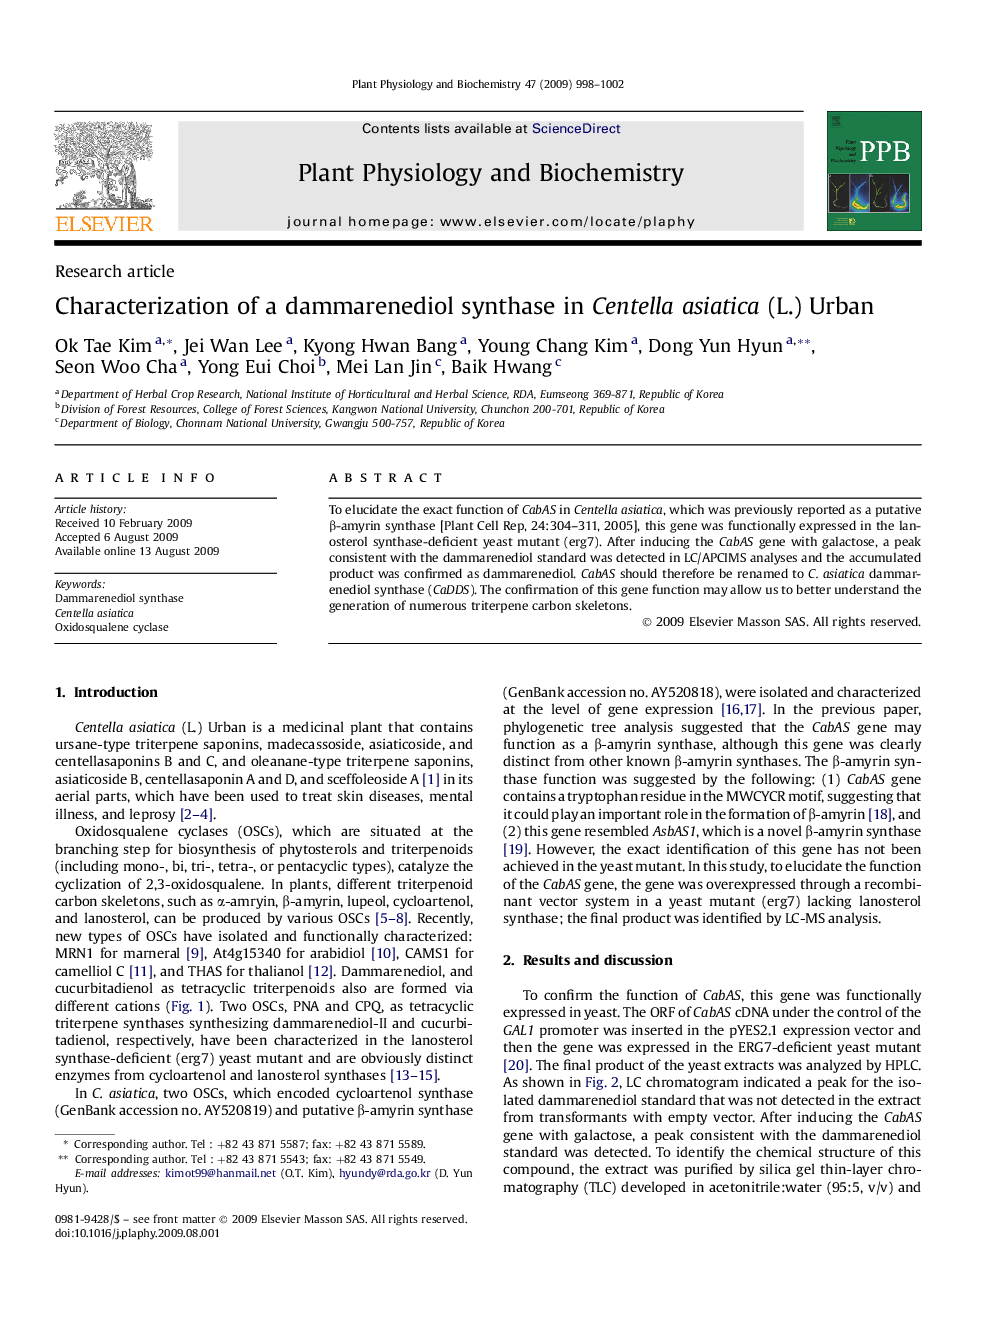 Characterization of a dammarenediol synthase in Centella asiatica (L.) Urban